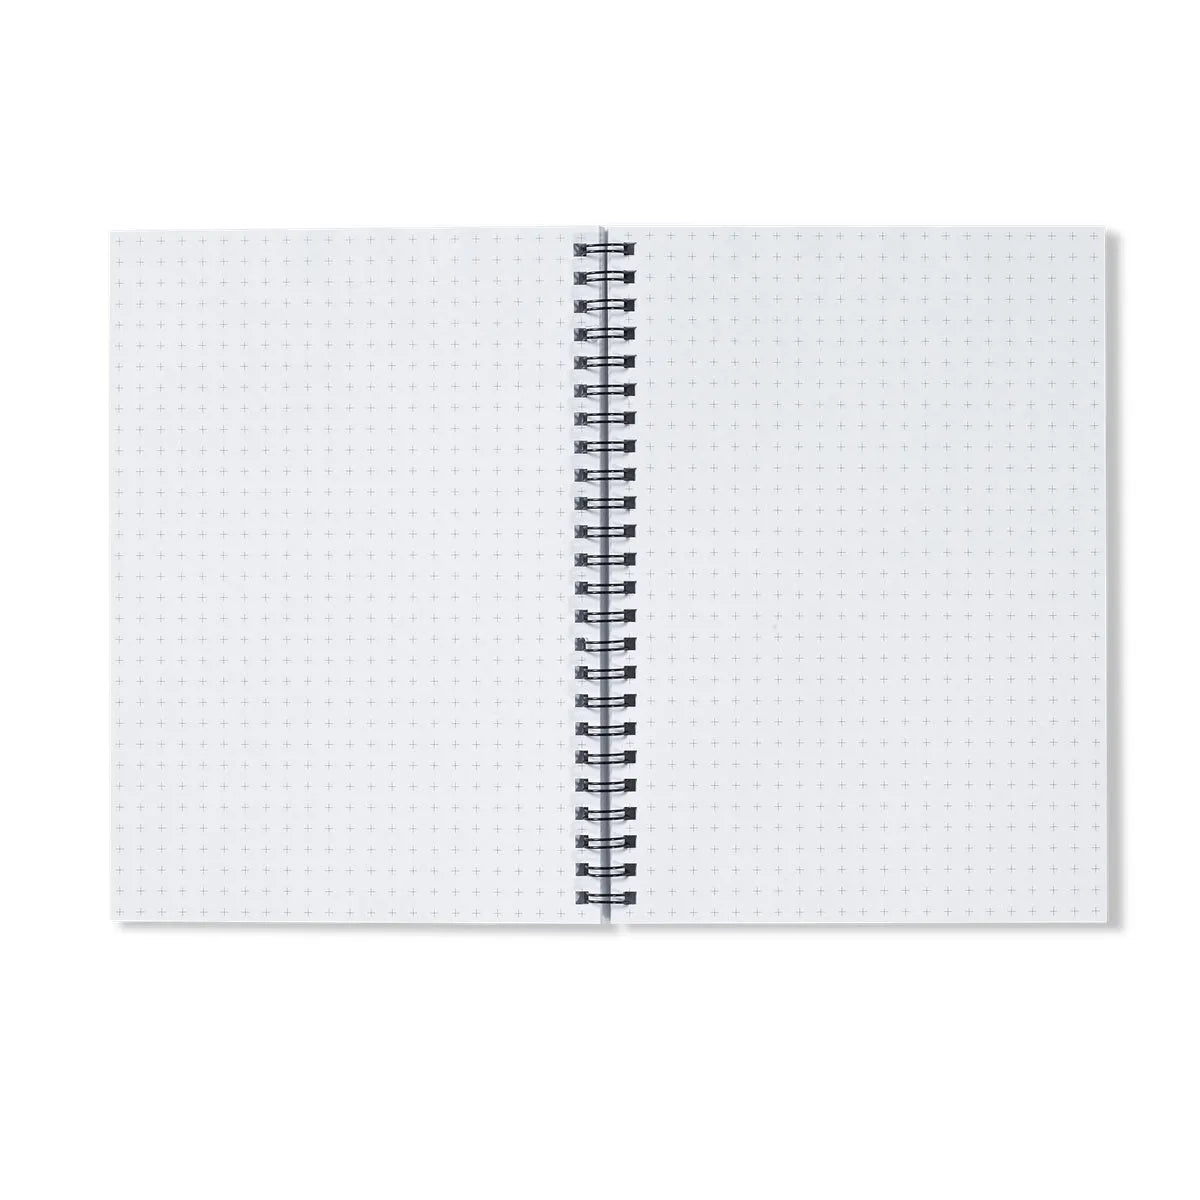 Just The Headlines Notebook - Notebooks & Notepads - Aesthetic Art